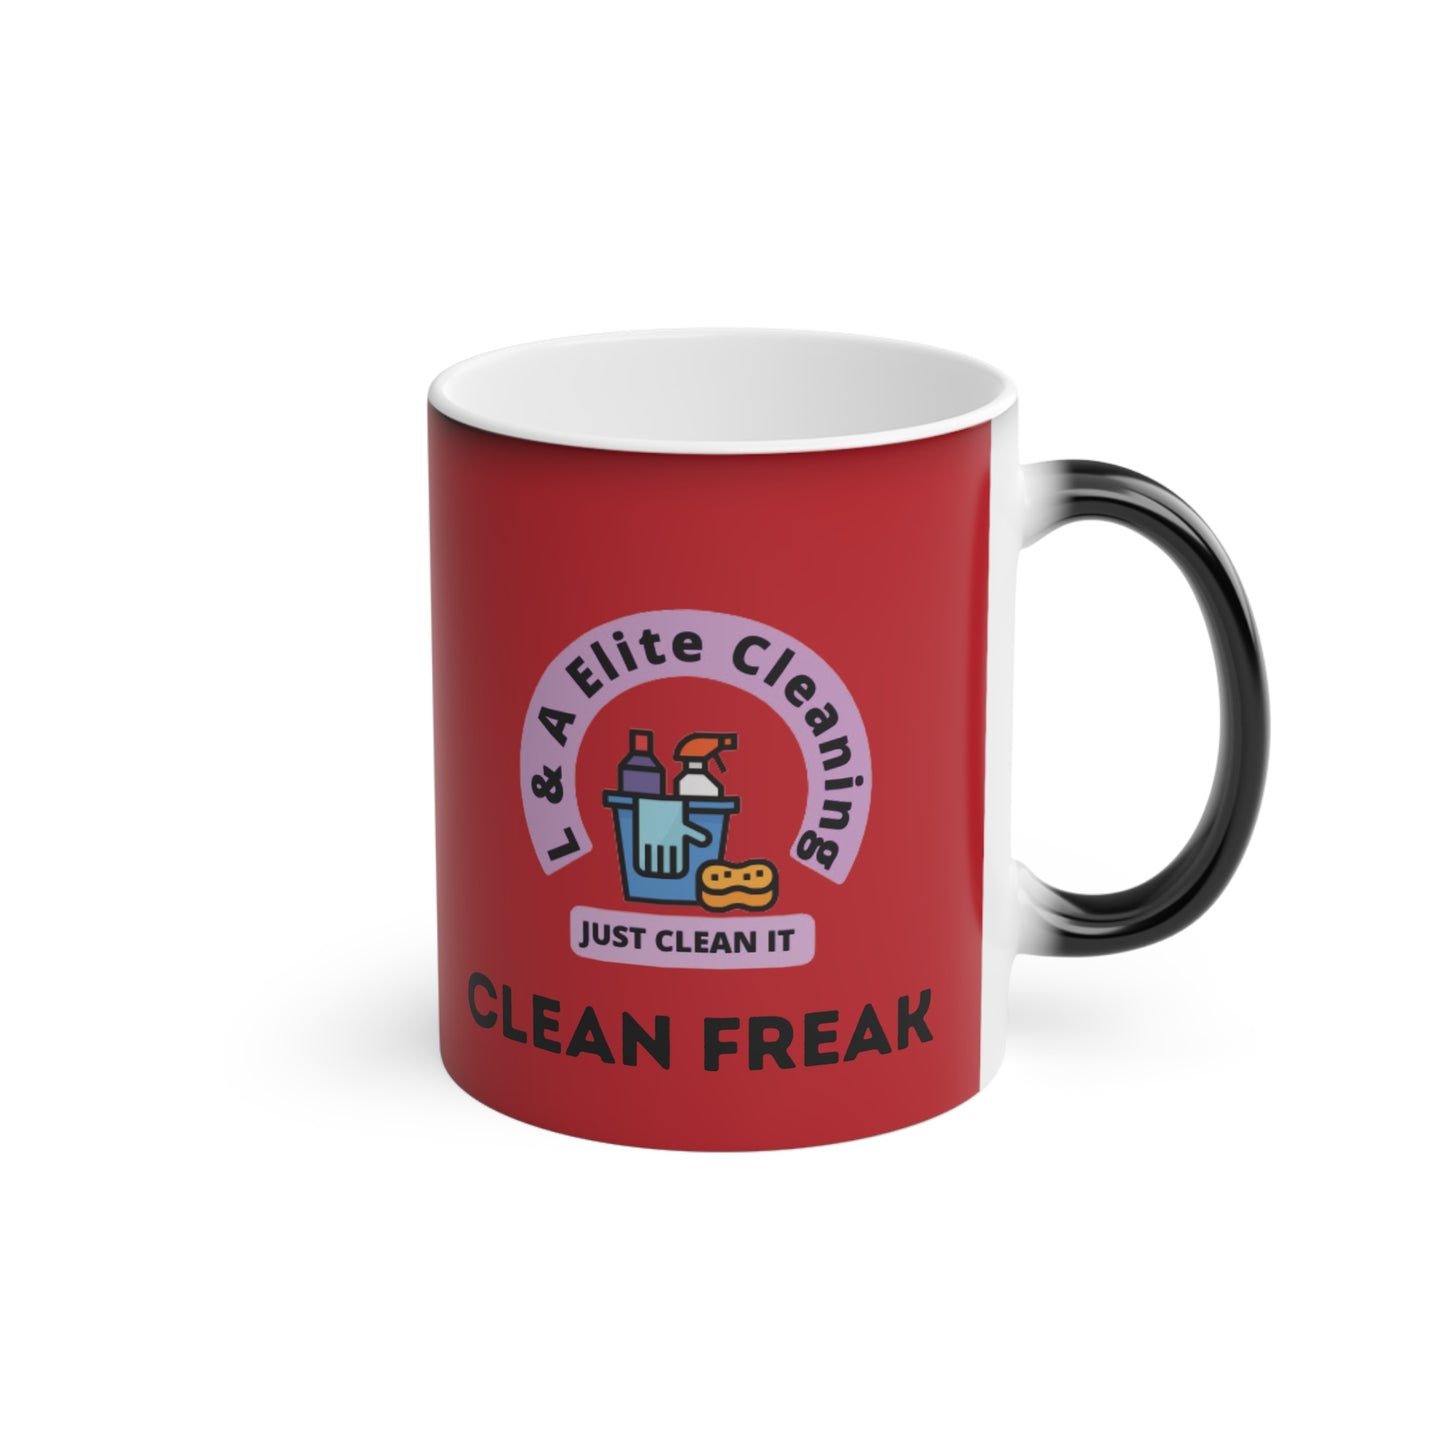 Clean Freak Mug